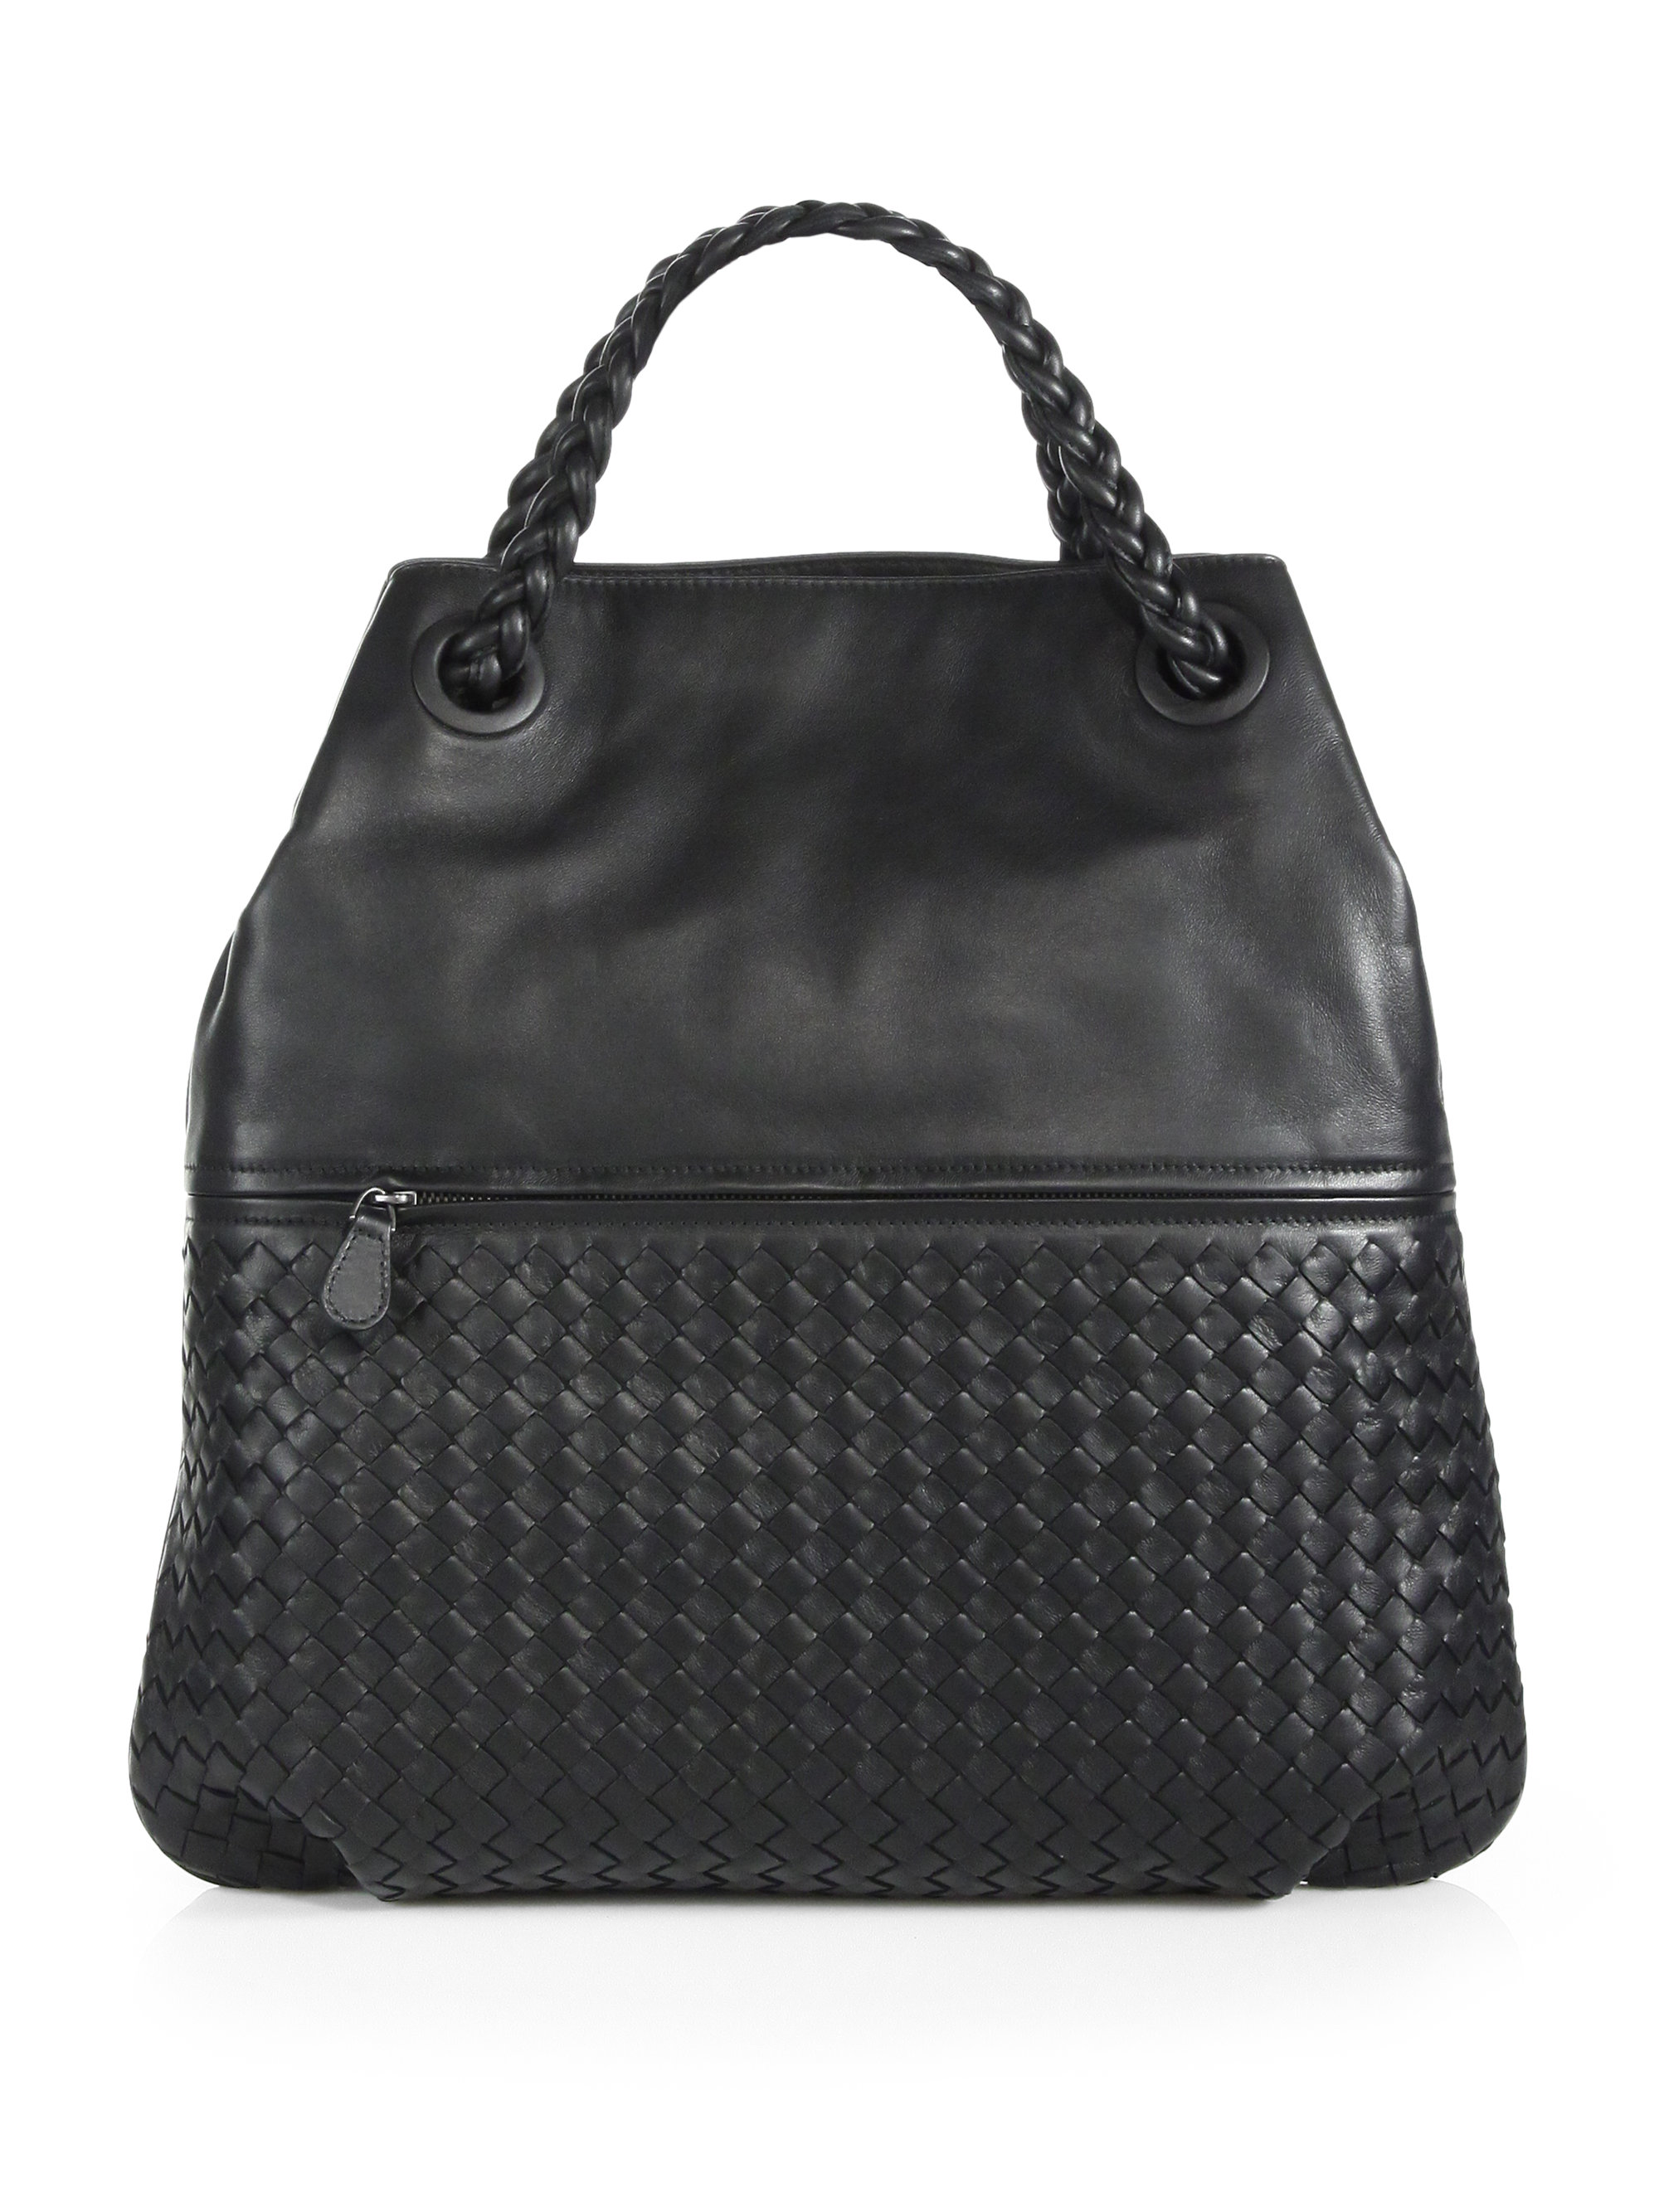 Lyst - Bottega veneta Medium Braided Handle Bag in Black